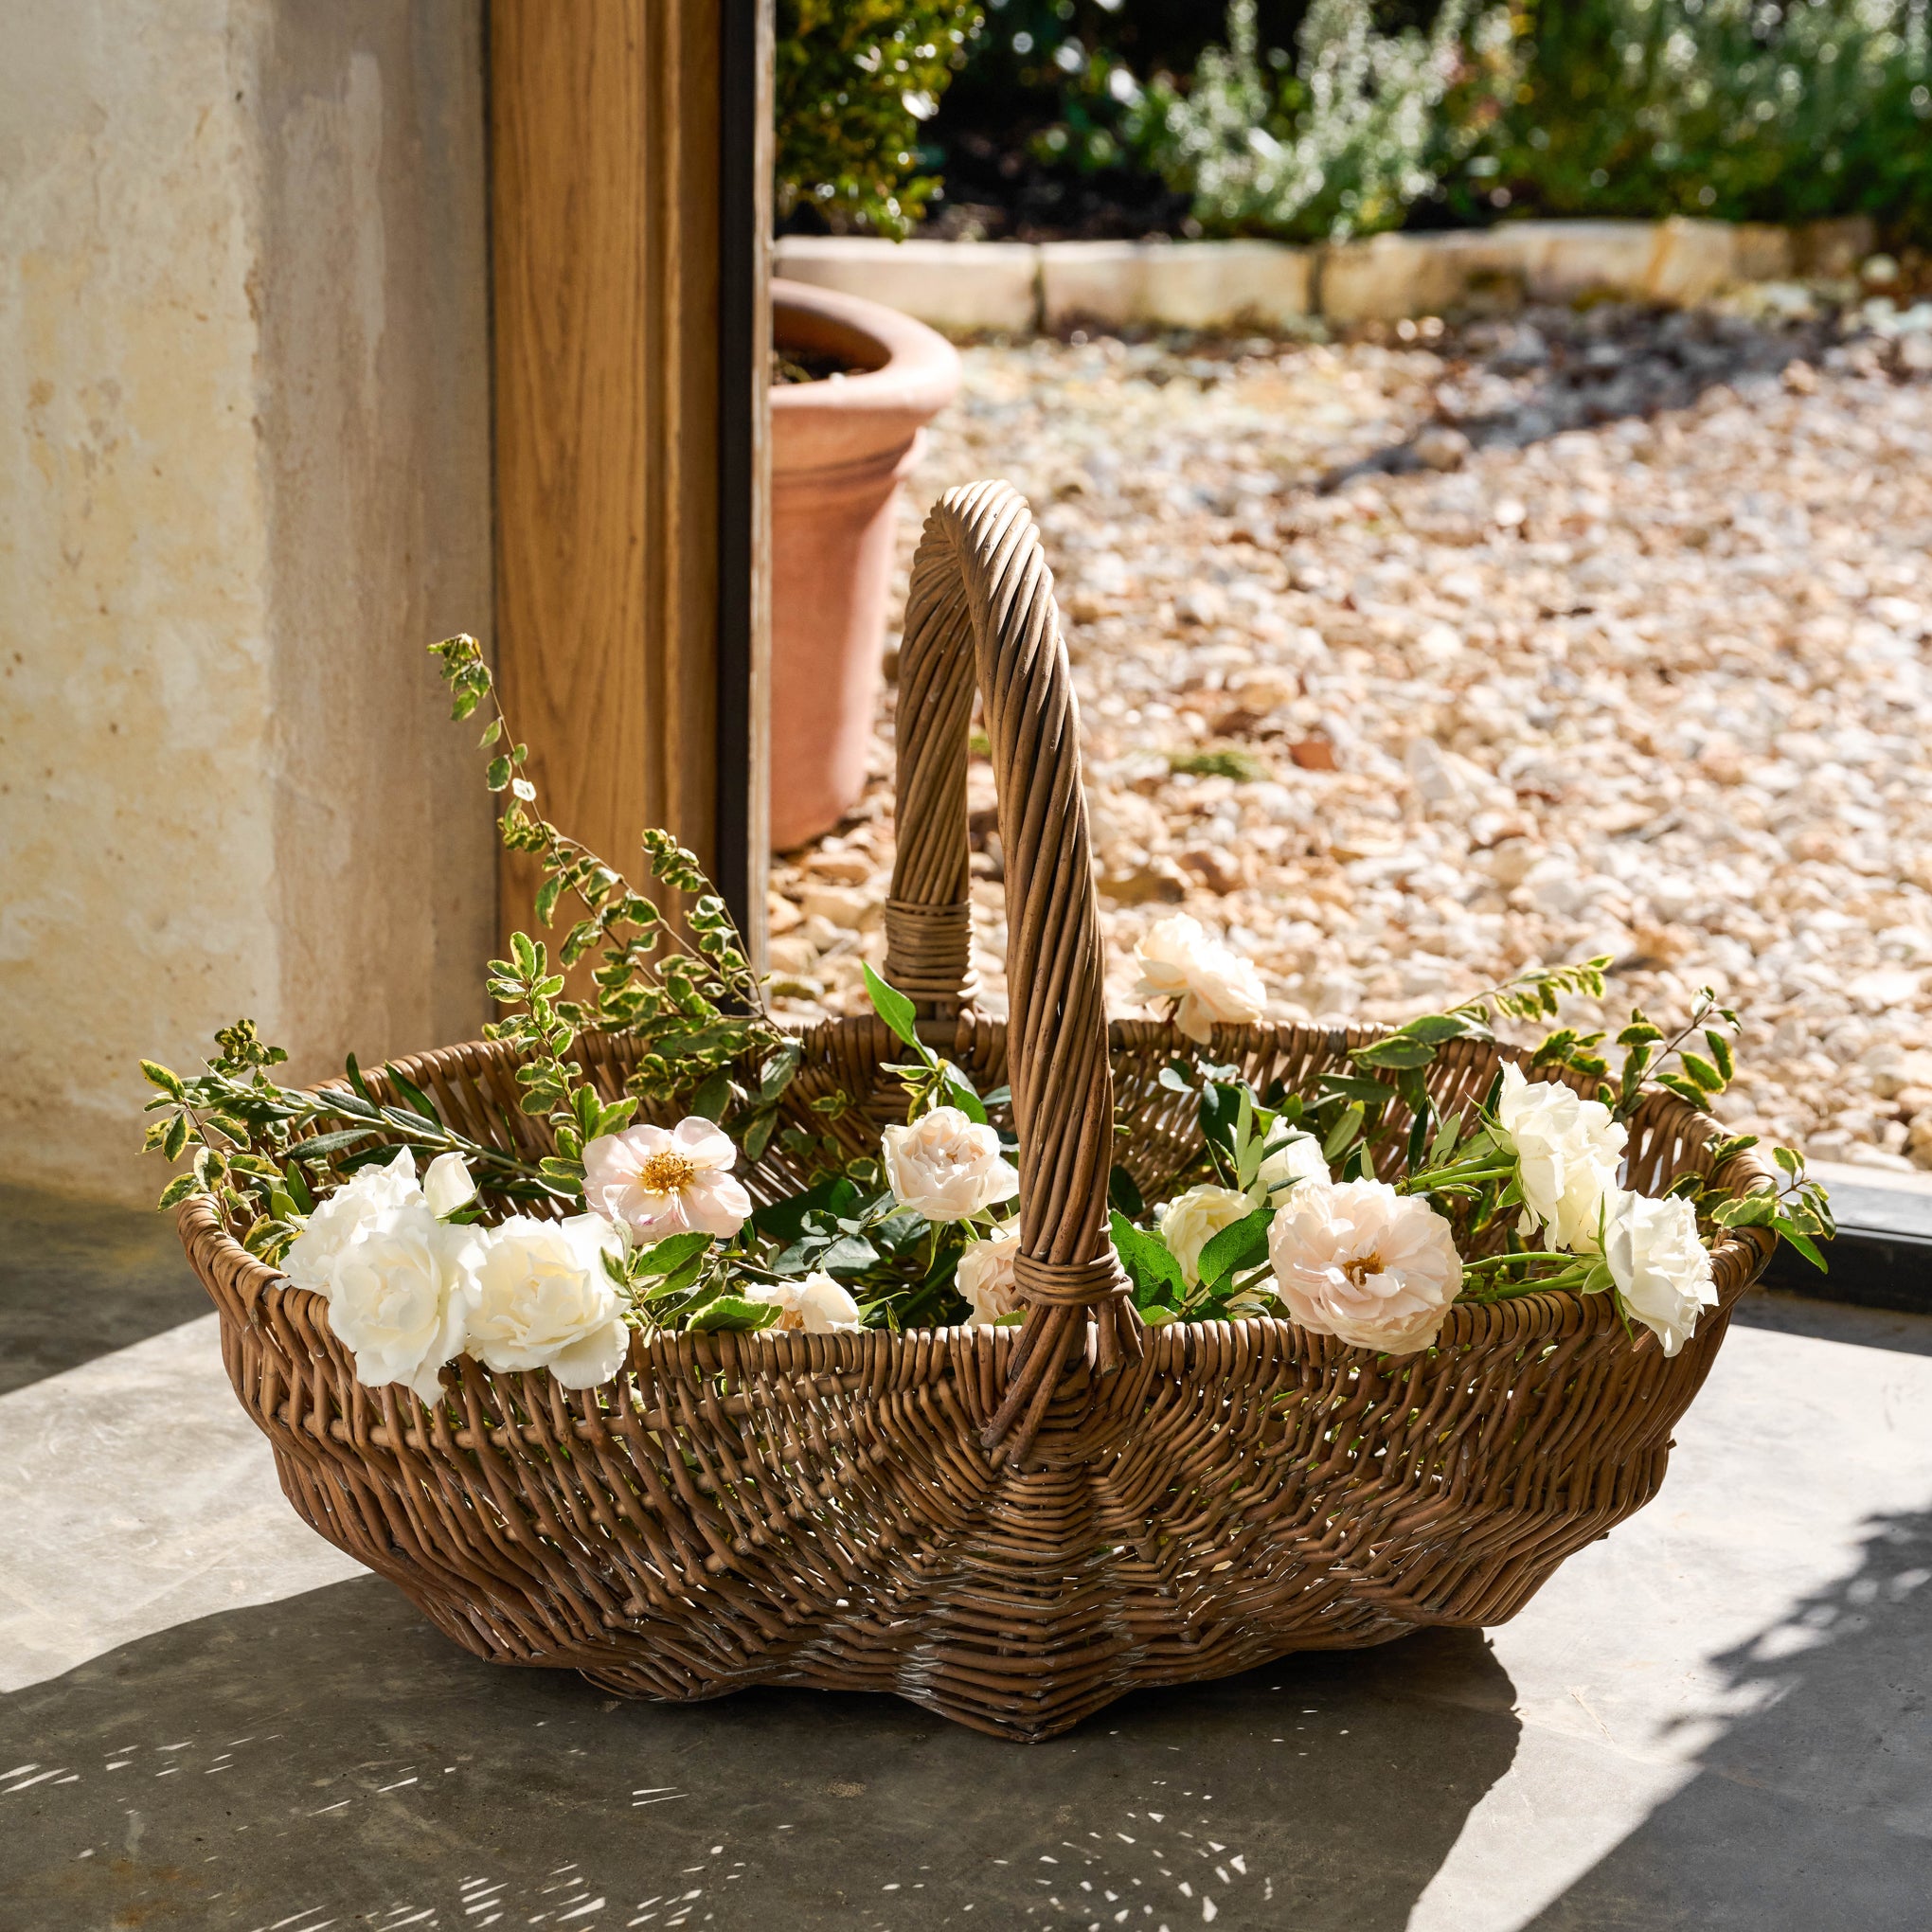 Garden Gathering Basket with flowers inside